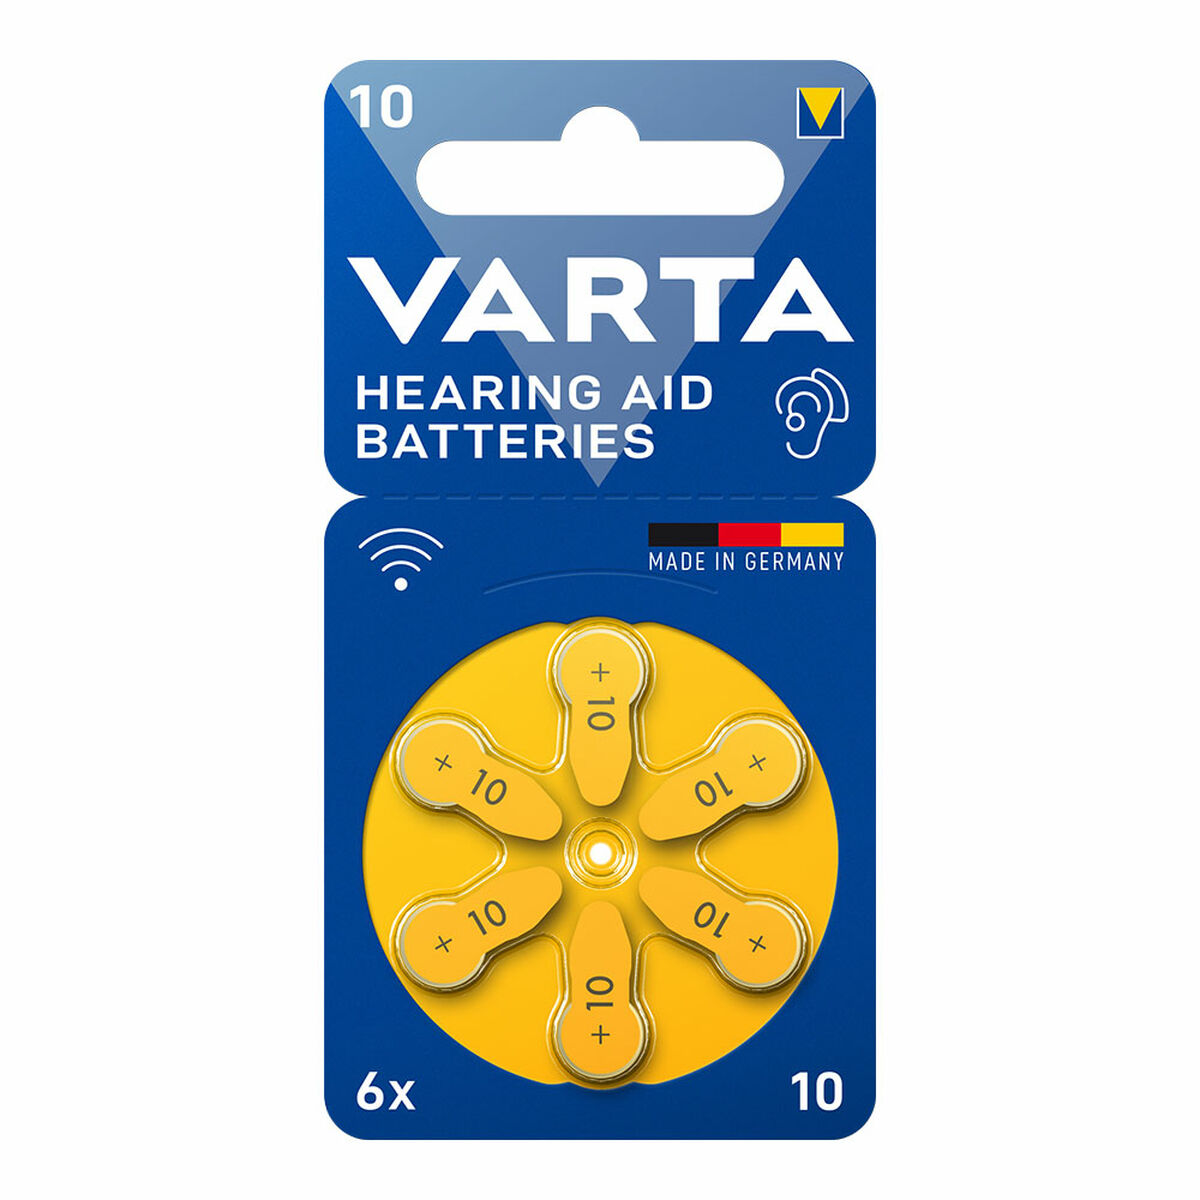 Hearing aid battery Varta Hearing Aid 10 PR70 6 Units